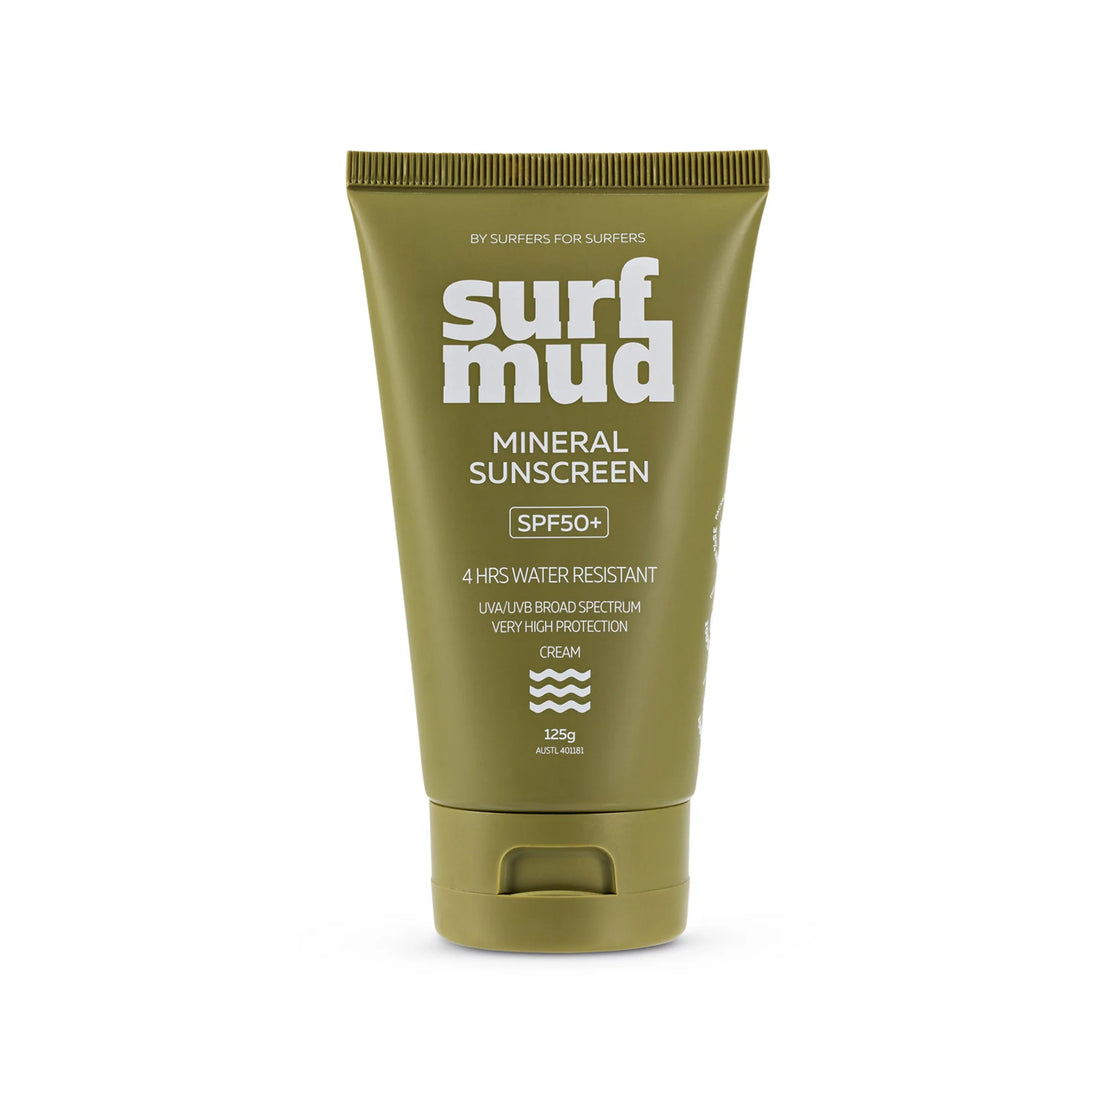 Surfmud - Mineral Sunscreen SPF50 Sunscreen - 125g - Seaside Surf Shop 